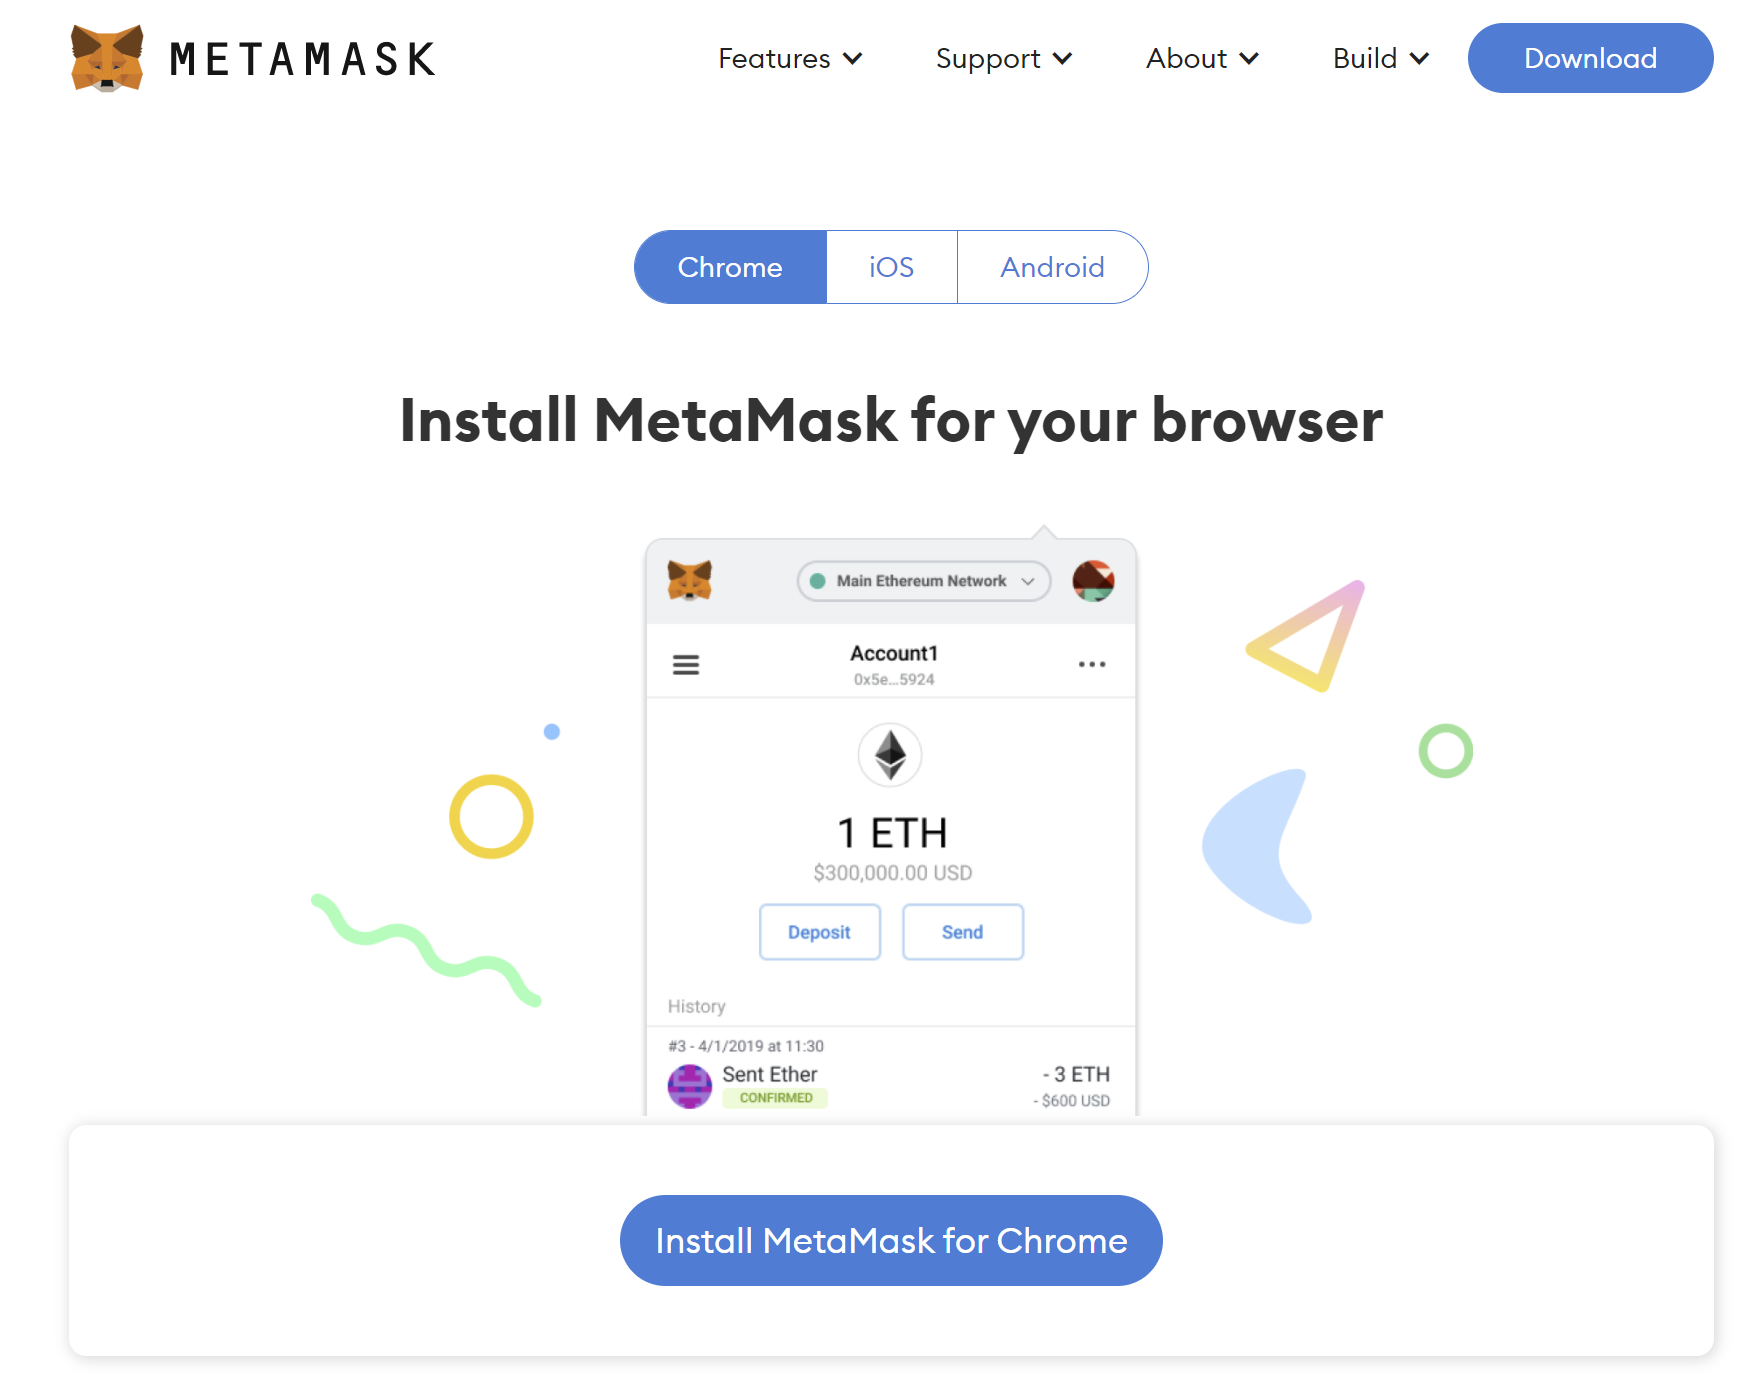 Select "install MetaMask for Chrome"